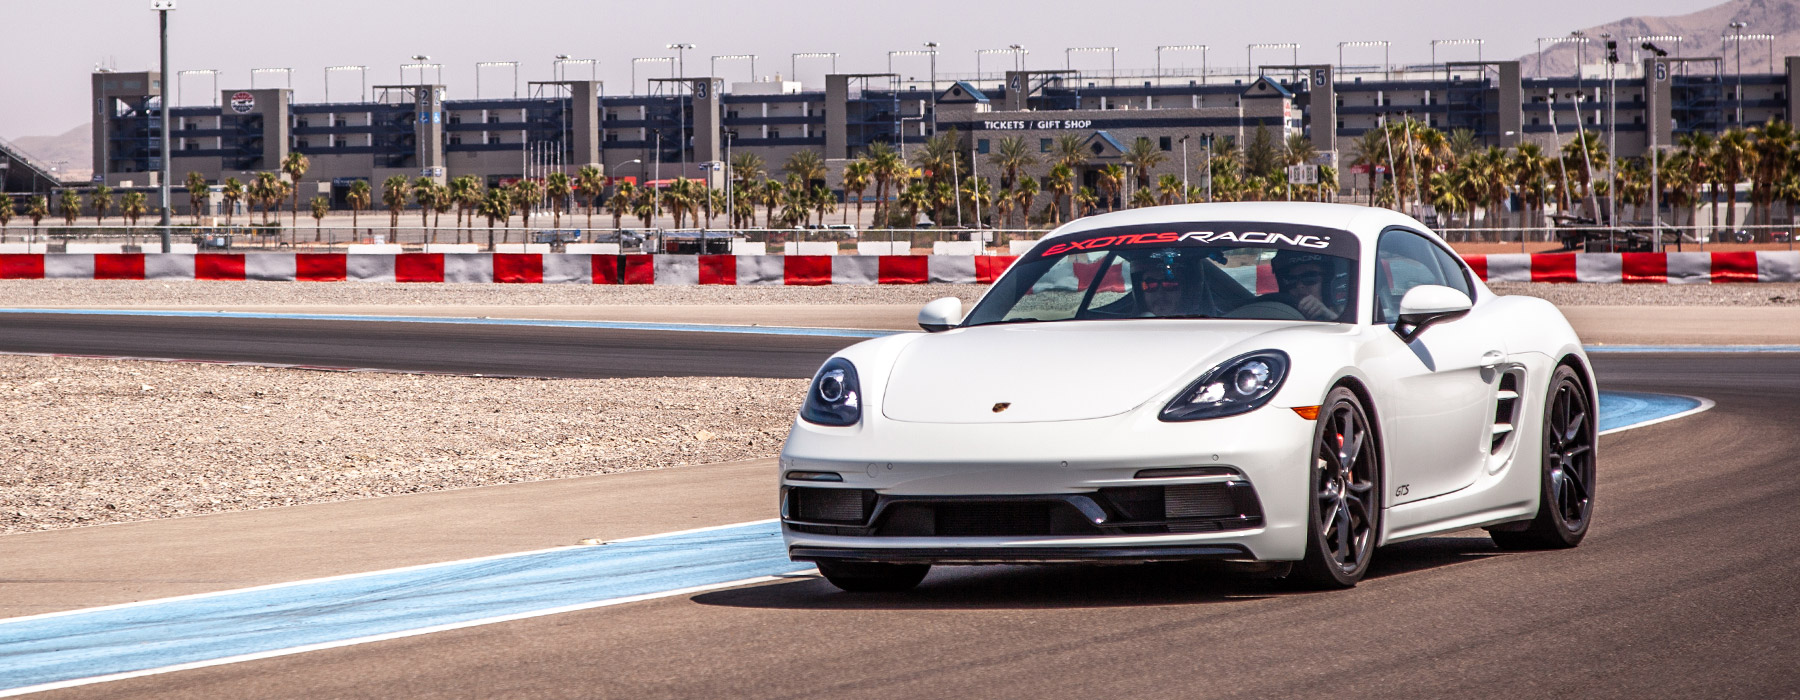 Porsche Motor Sports - Porsche live at the race track - Porsche